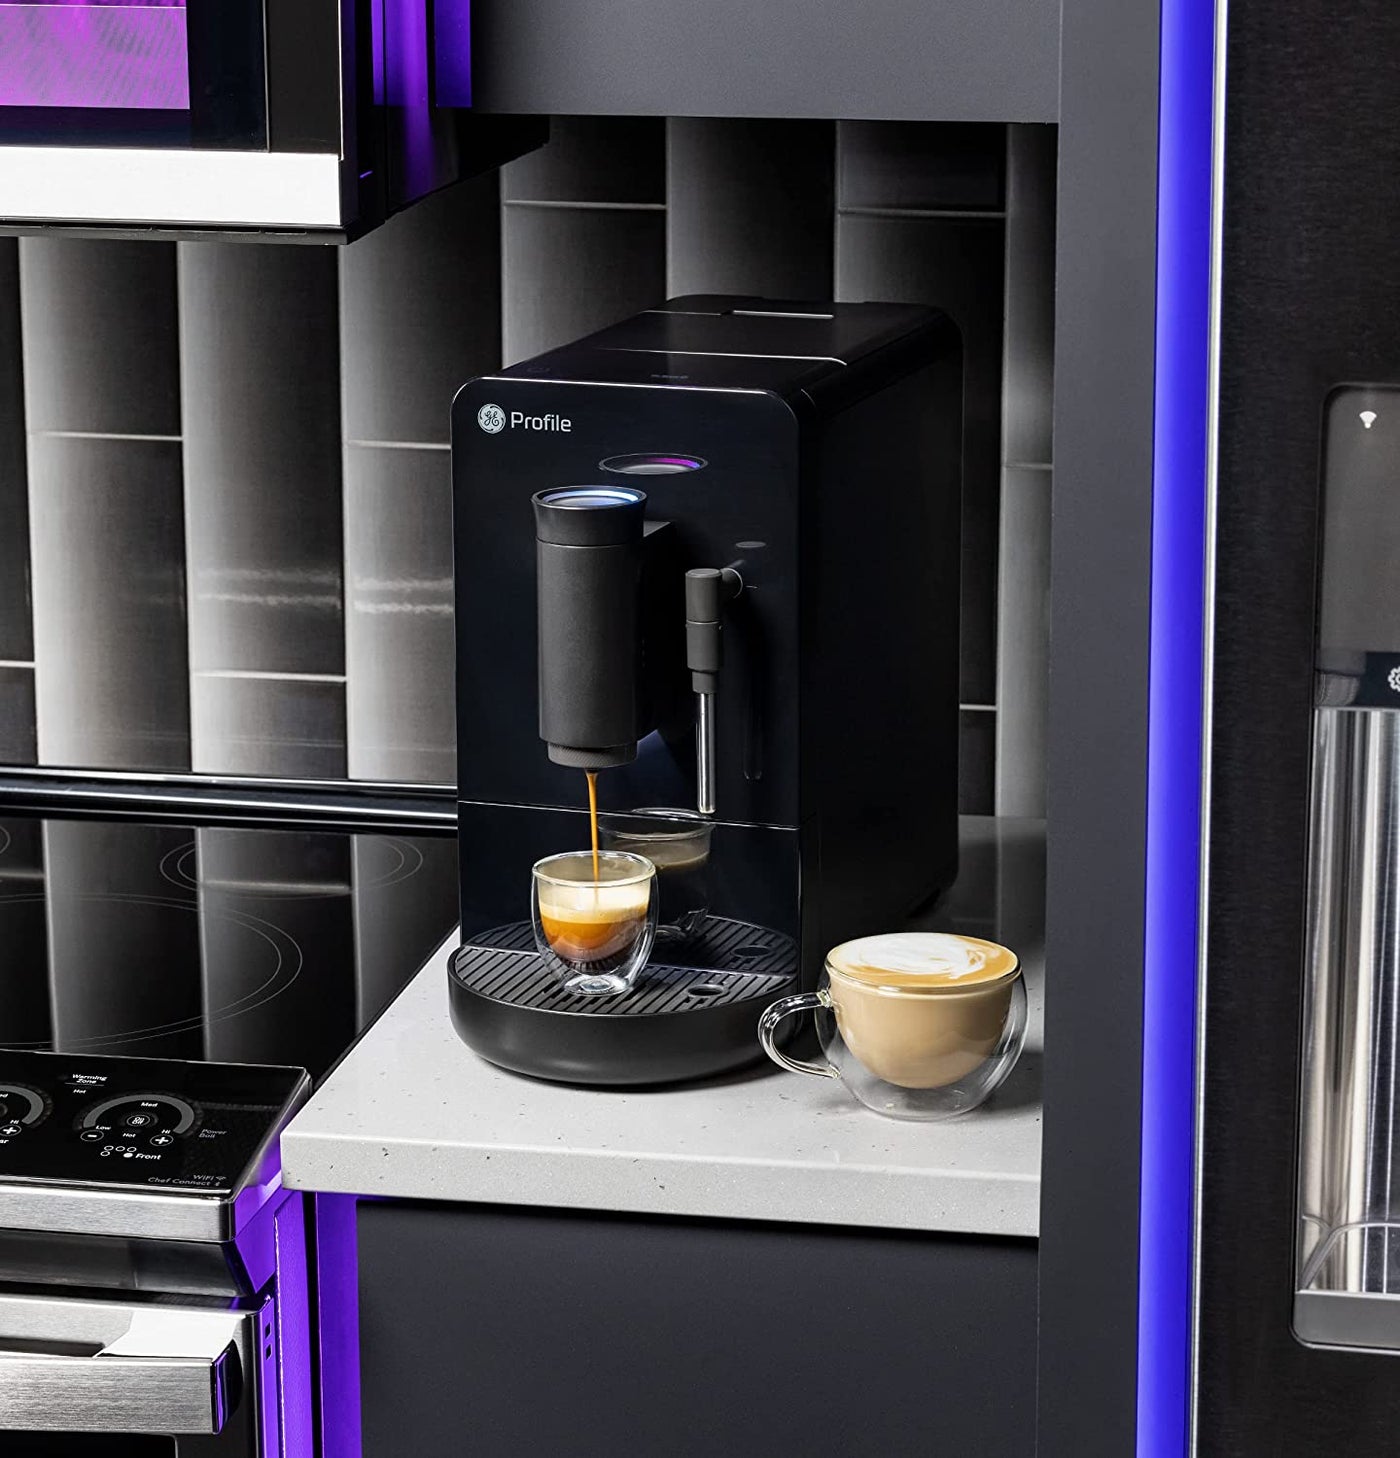 GE Profile Automatic Espresso Machine + Milk Frother | WiFi | 30-Day Warranty | Black - $200